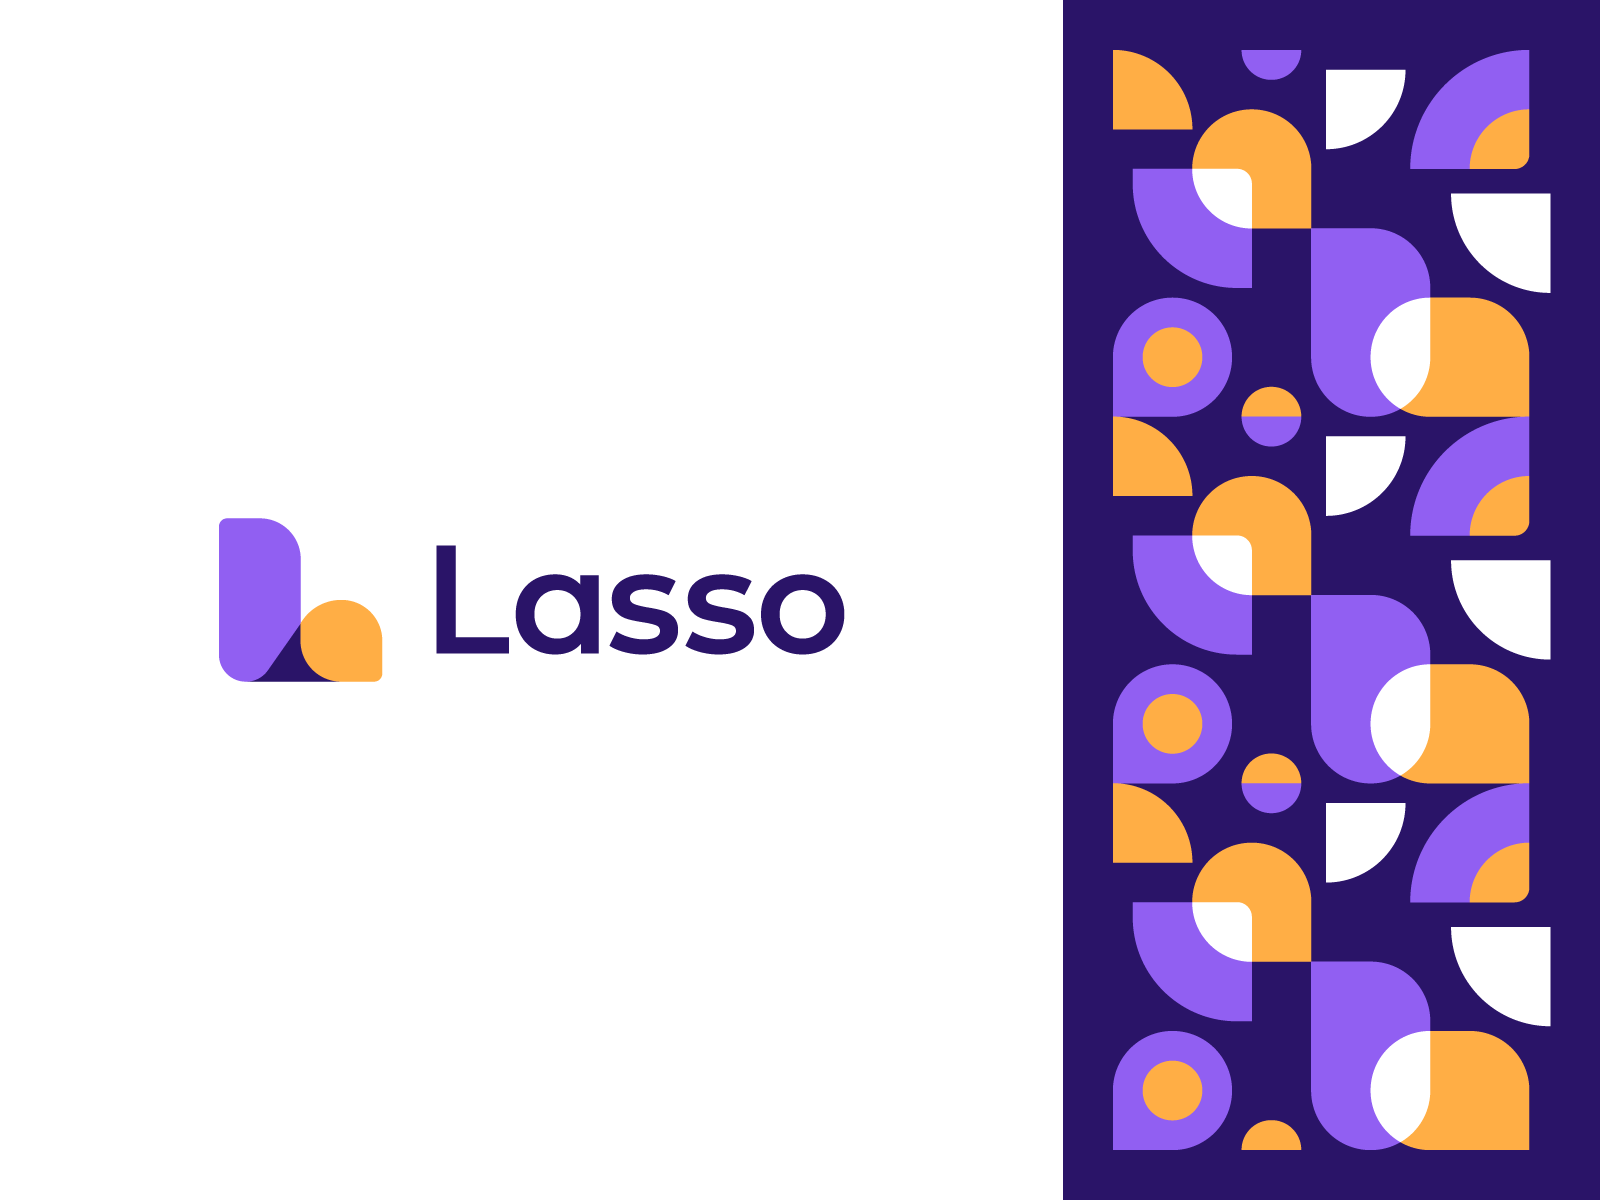 Personable, Colorful Logo Design for Lasso, lasso or LASSO by Rendell Sueña